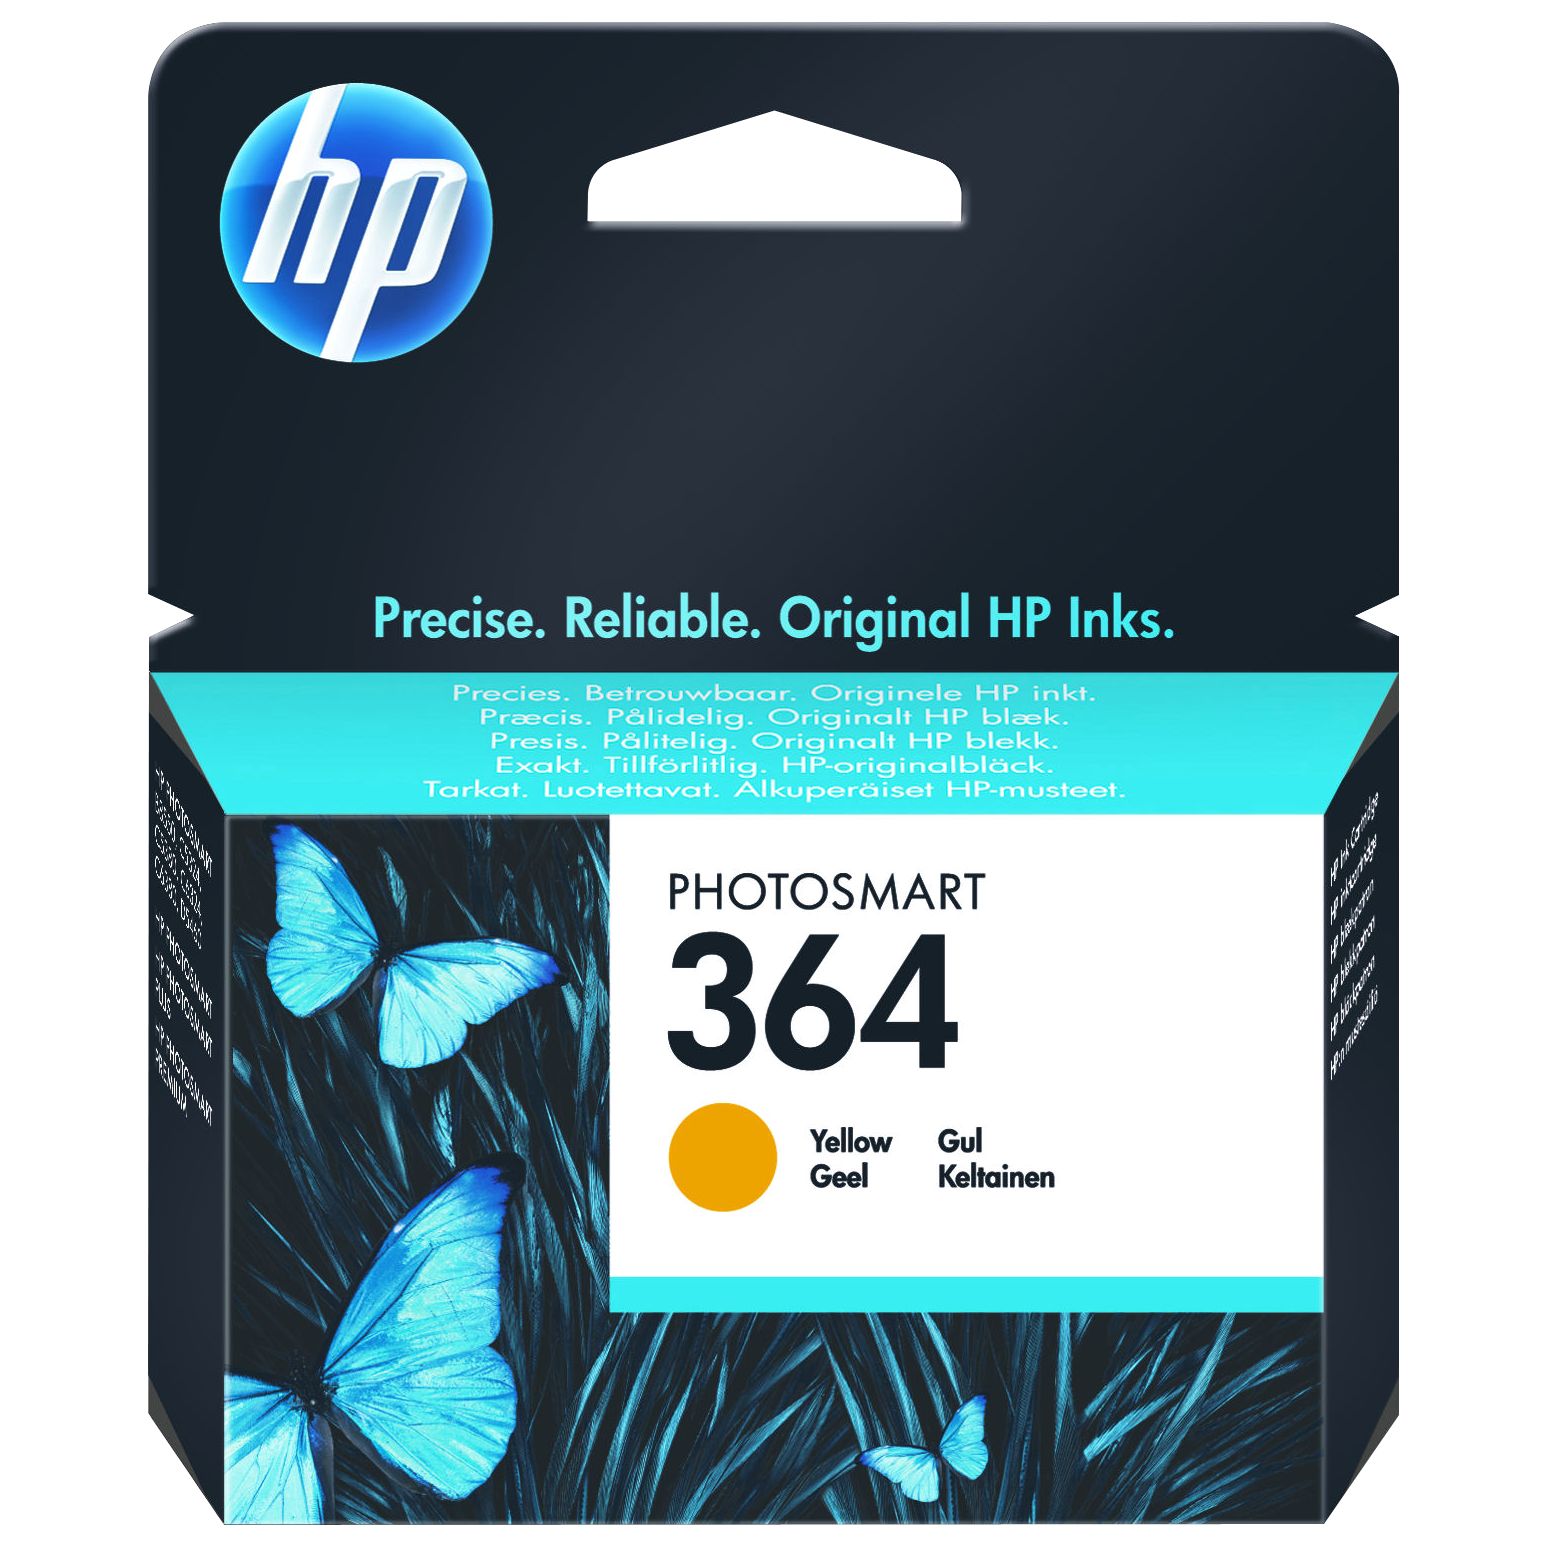 HP 364 Photosmart Ink Cartridge, Yellow, CB320EE